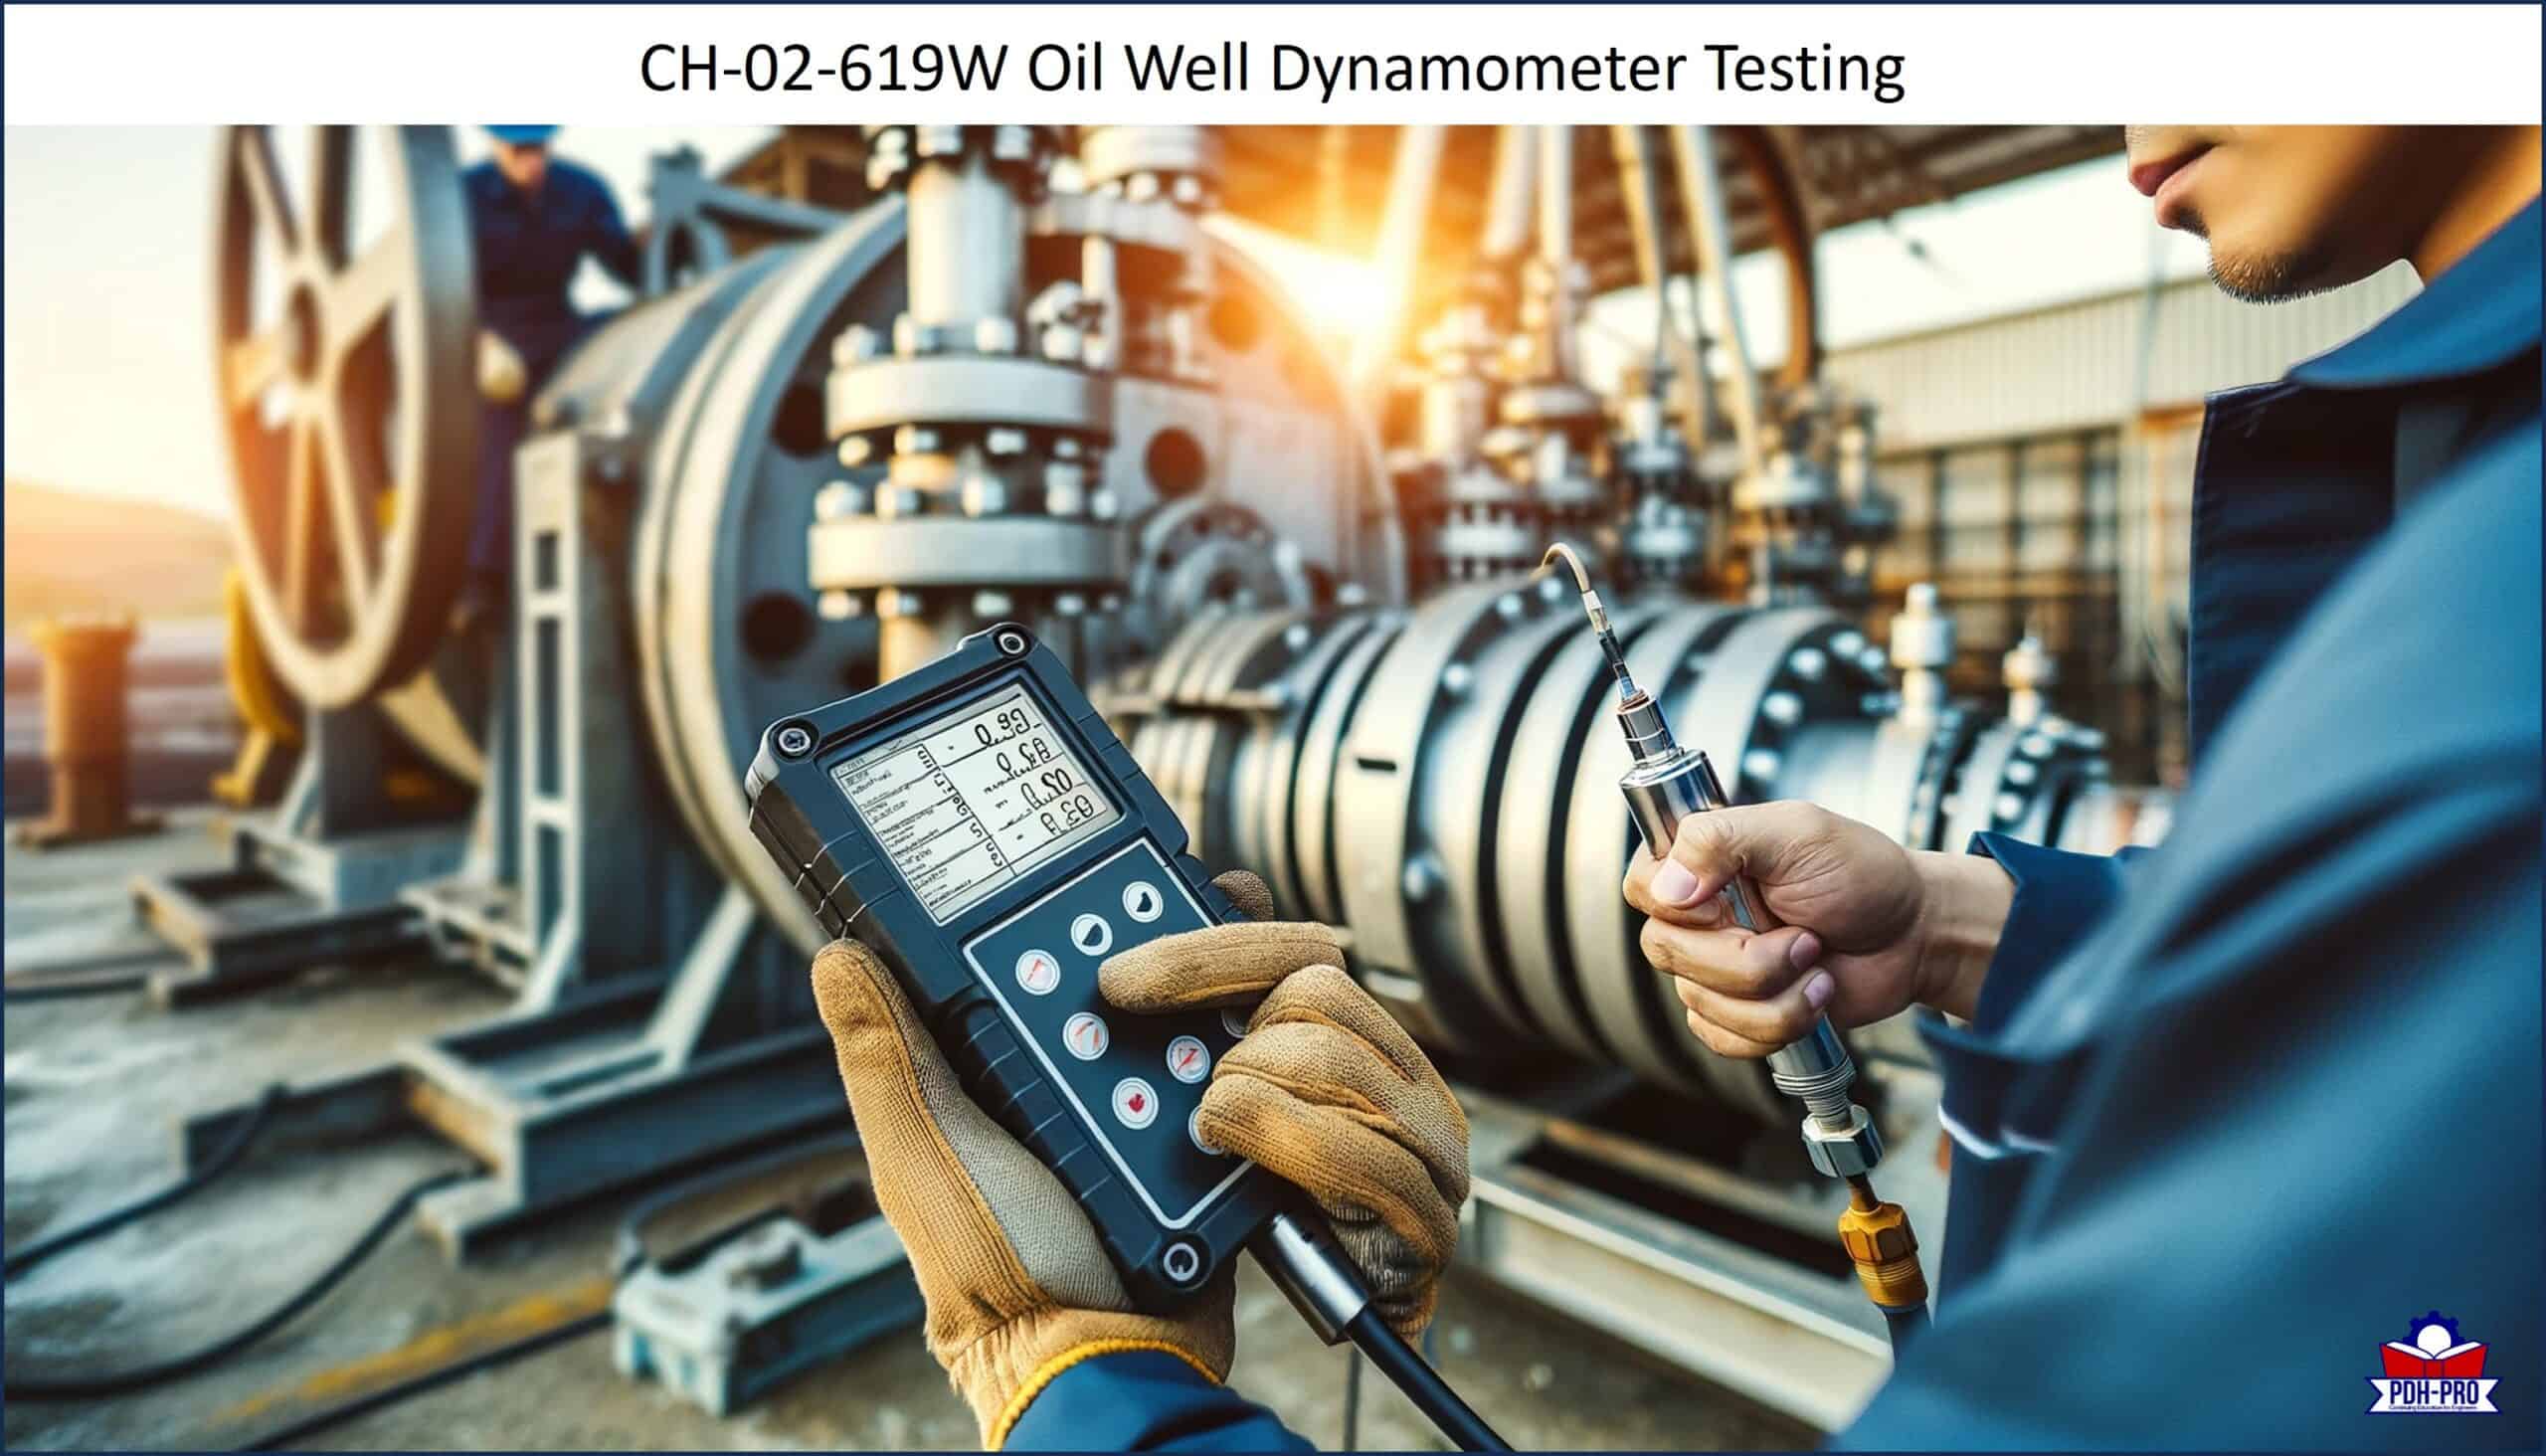 Oil Well Dynamometer Testing